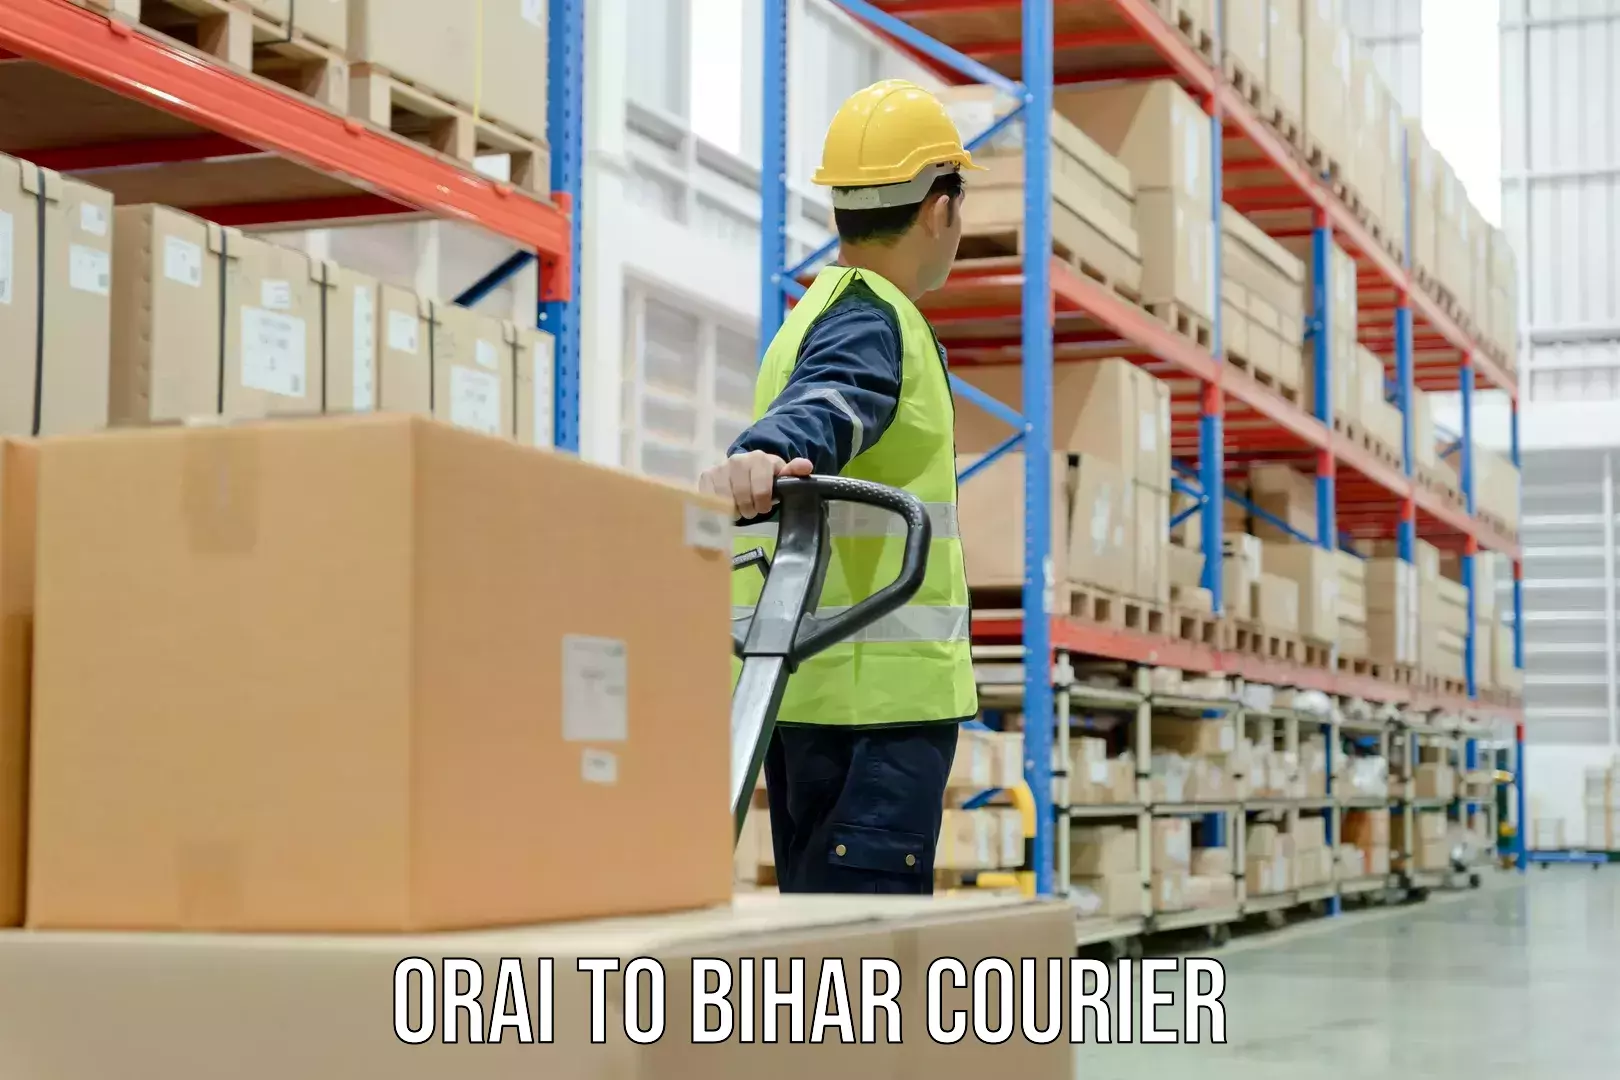 Courier service innovation Orai to Bihar